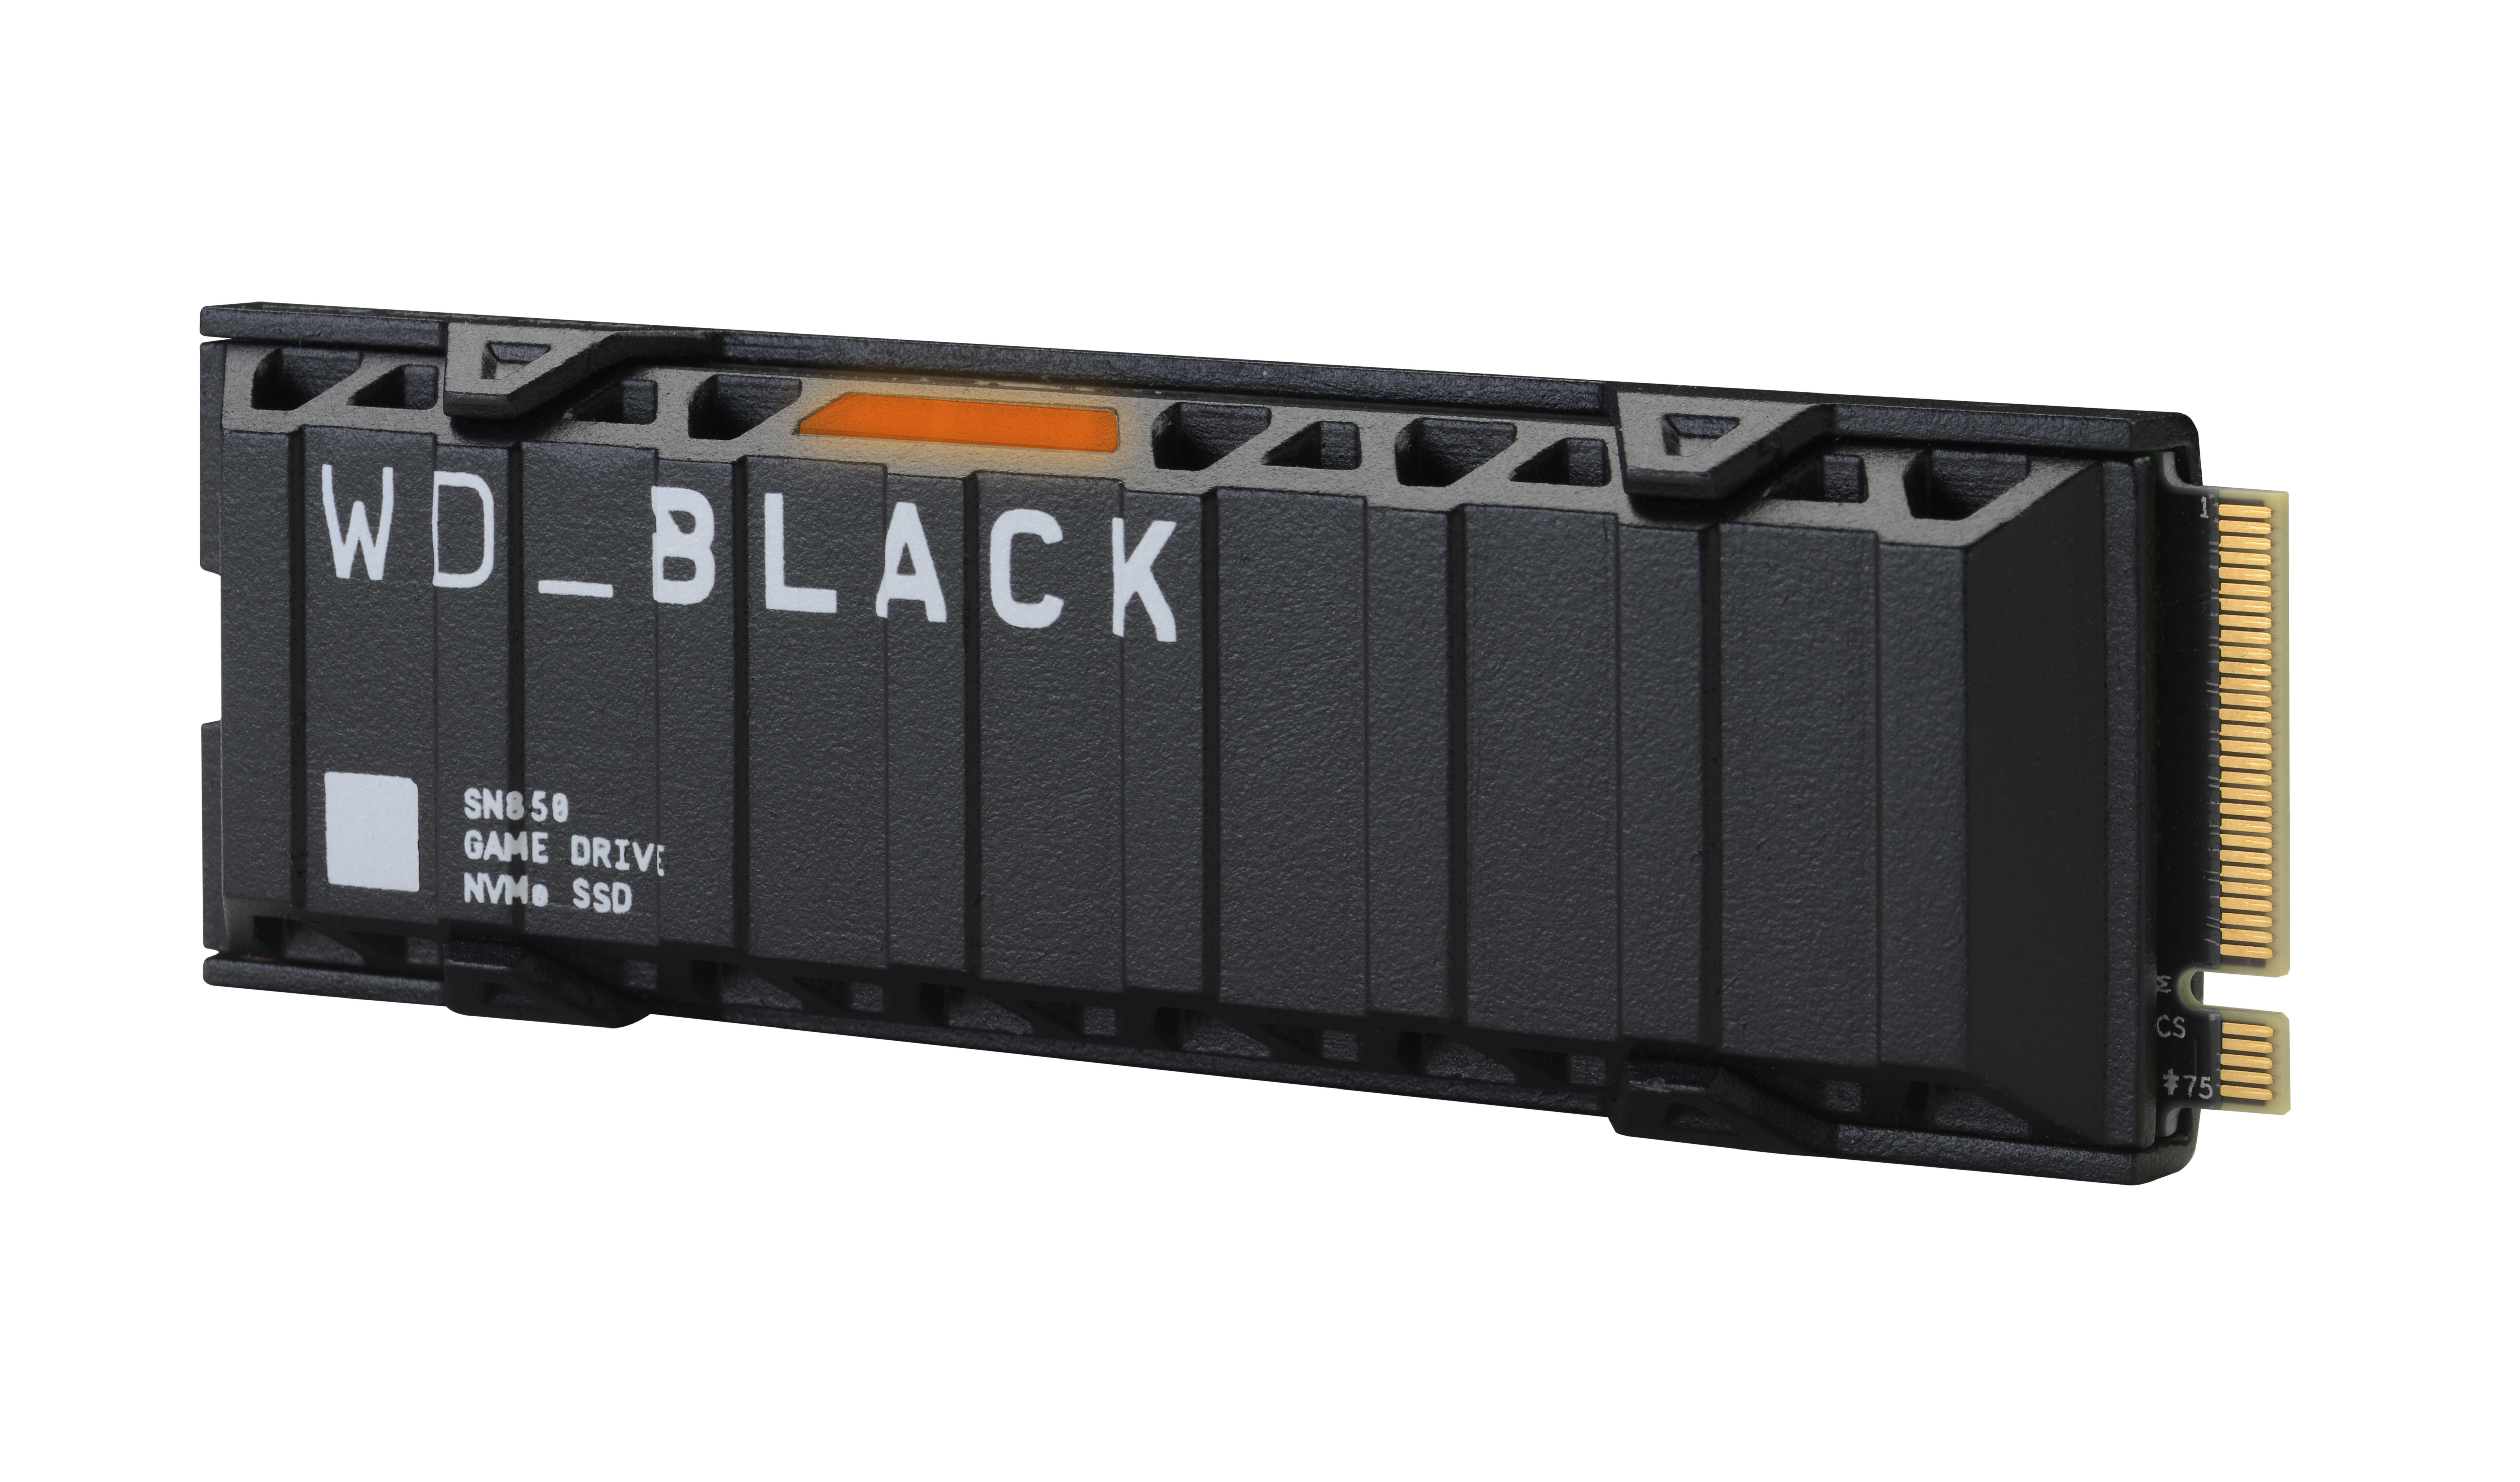 WD_BLACK SN850 mit Kühlkörper - PlayStation™ intern Gaming with 1 SSD, TB PCI 5*, Express, SSD Works